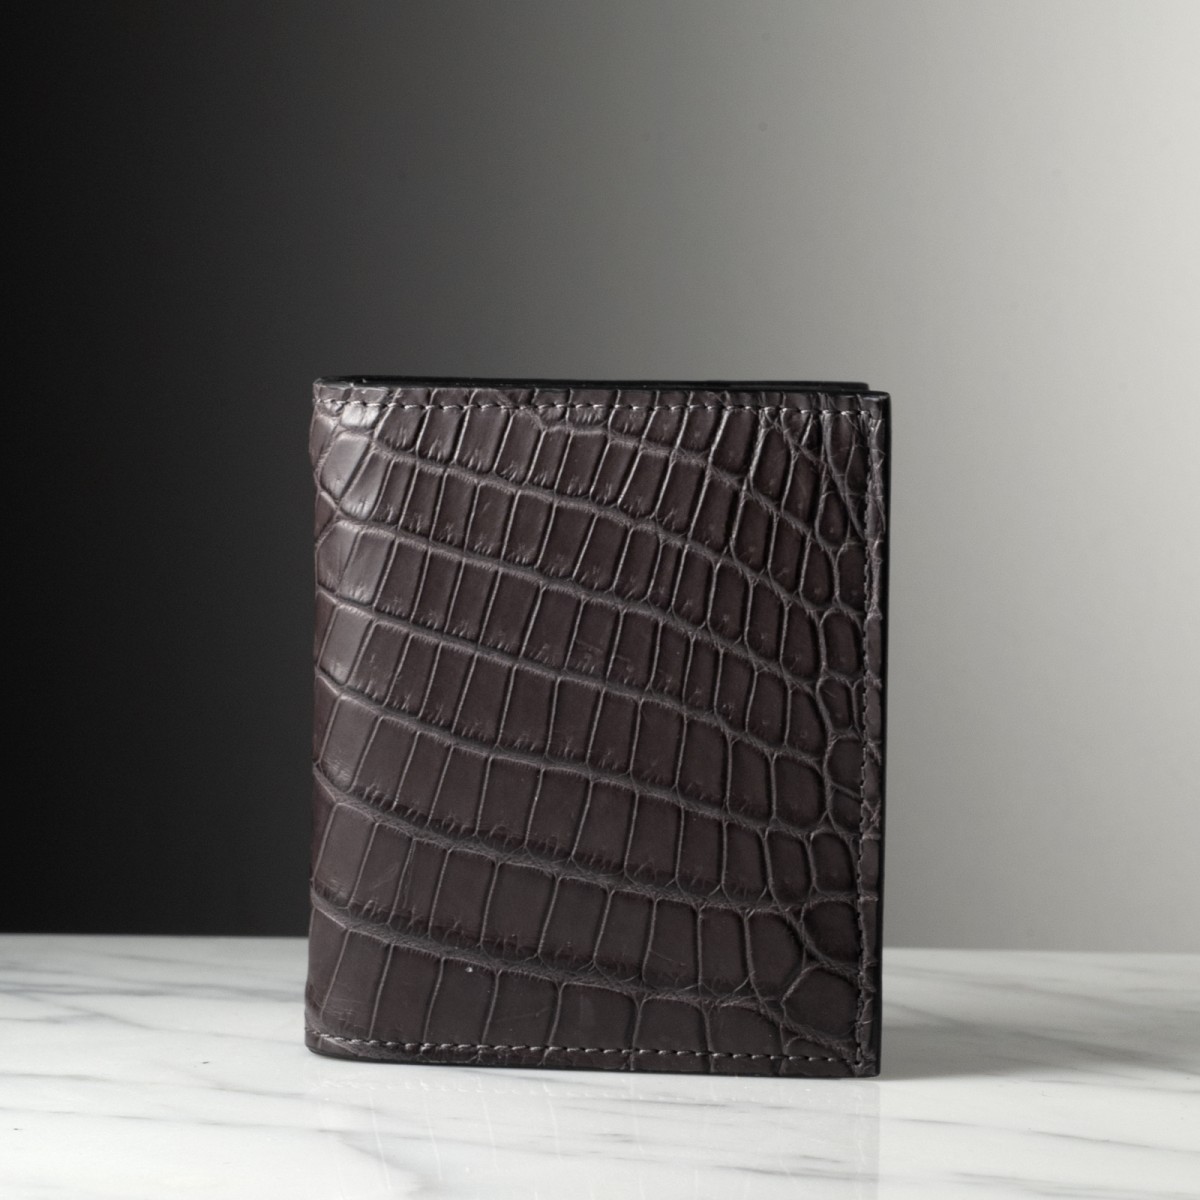 MARCO CROCODILE - Crocodile leather wallet, handmade in Italy